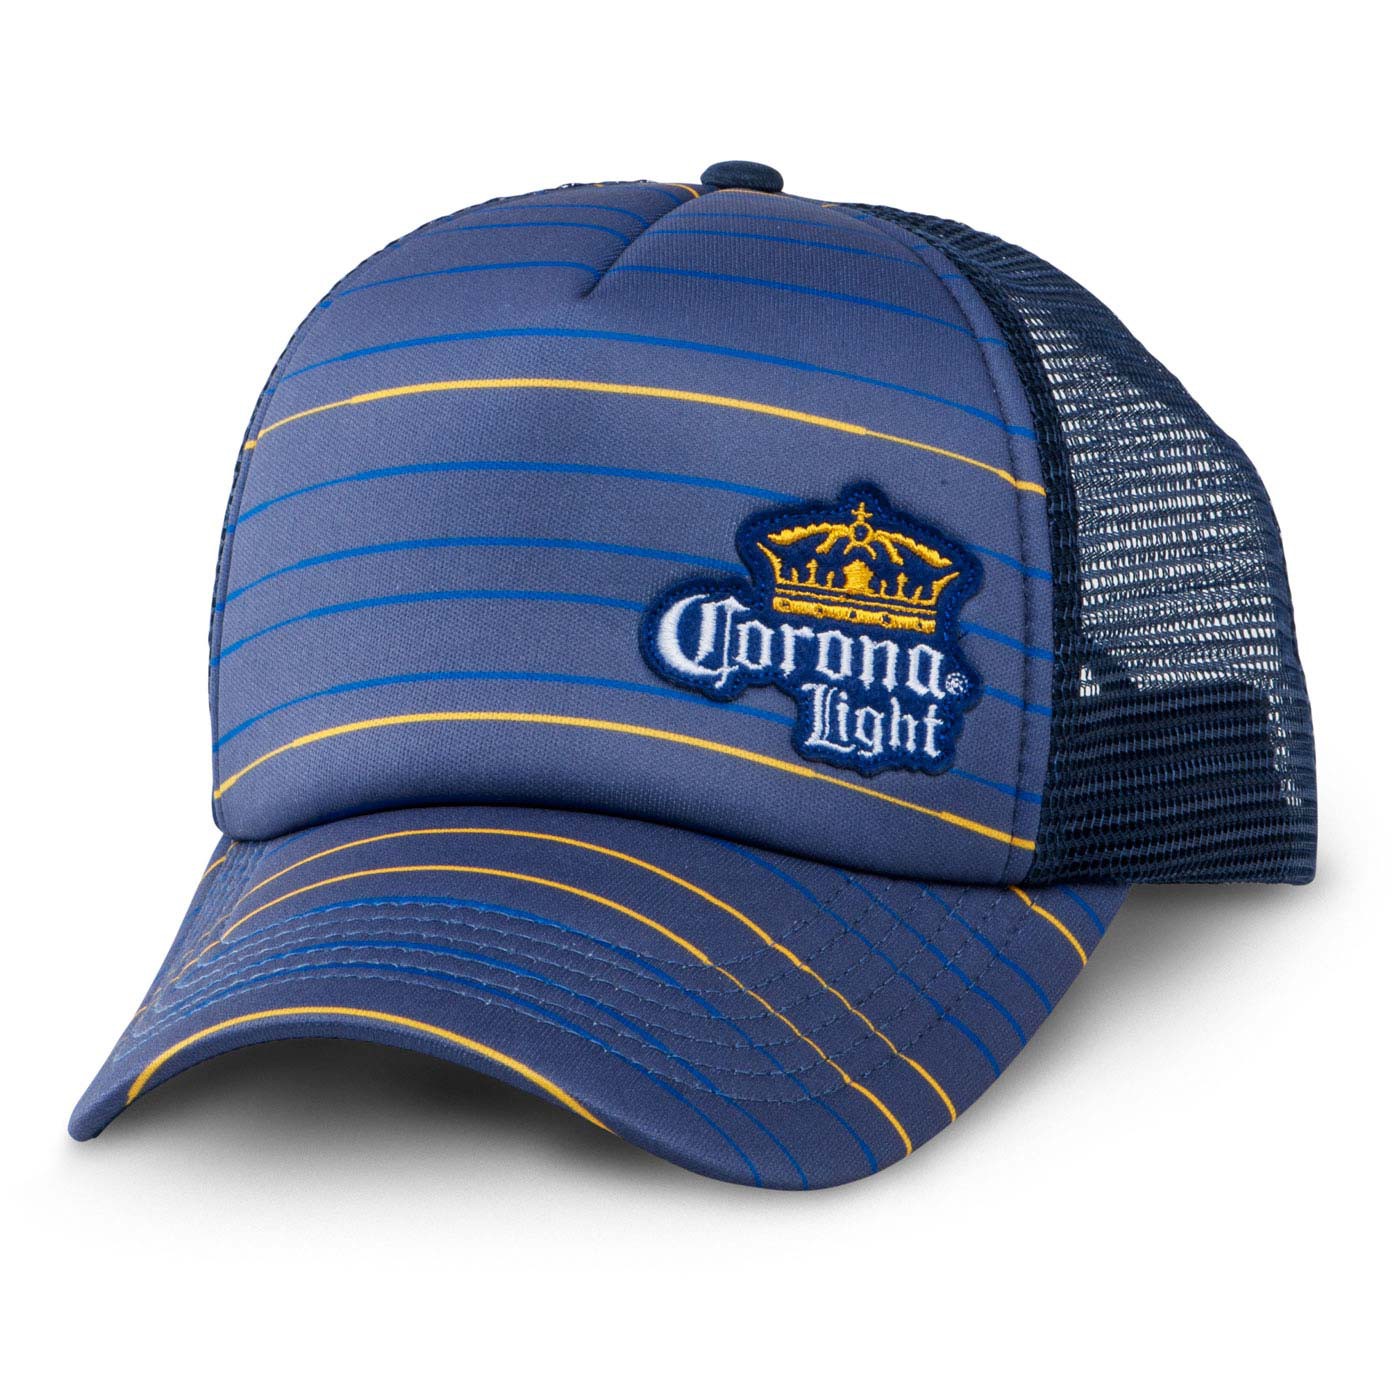 Corona Light Striped Trucker Hat